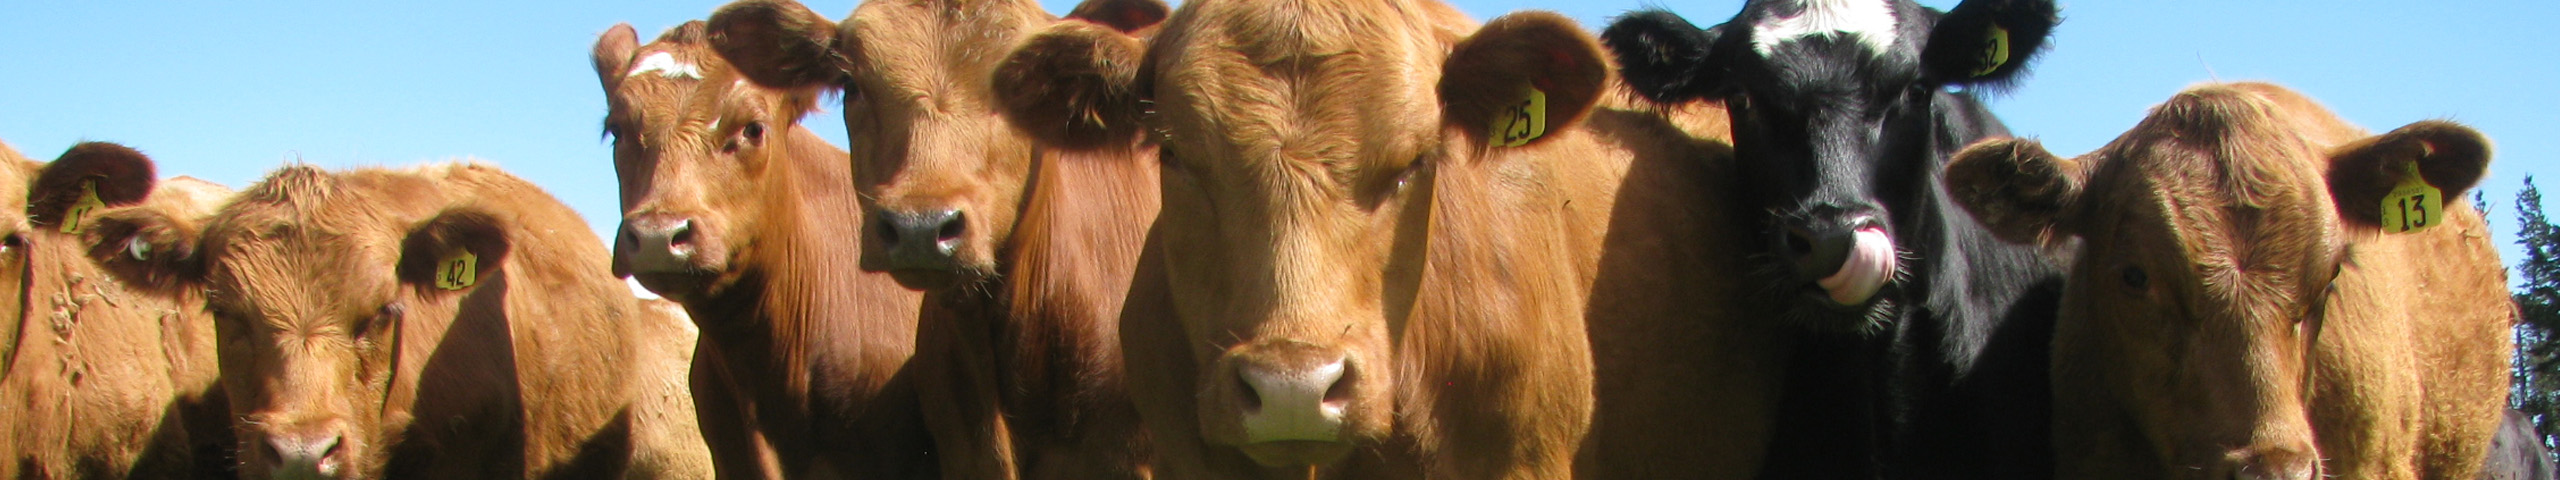 Cattle grazing on One50 AR37 perennial ryegrass